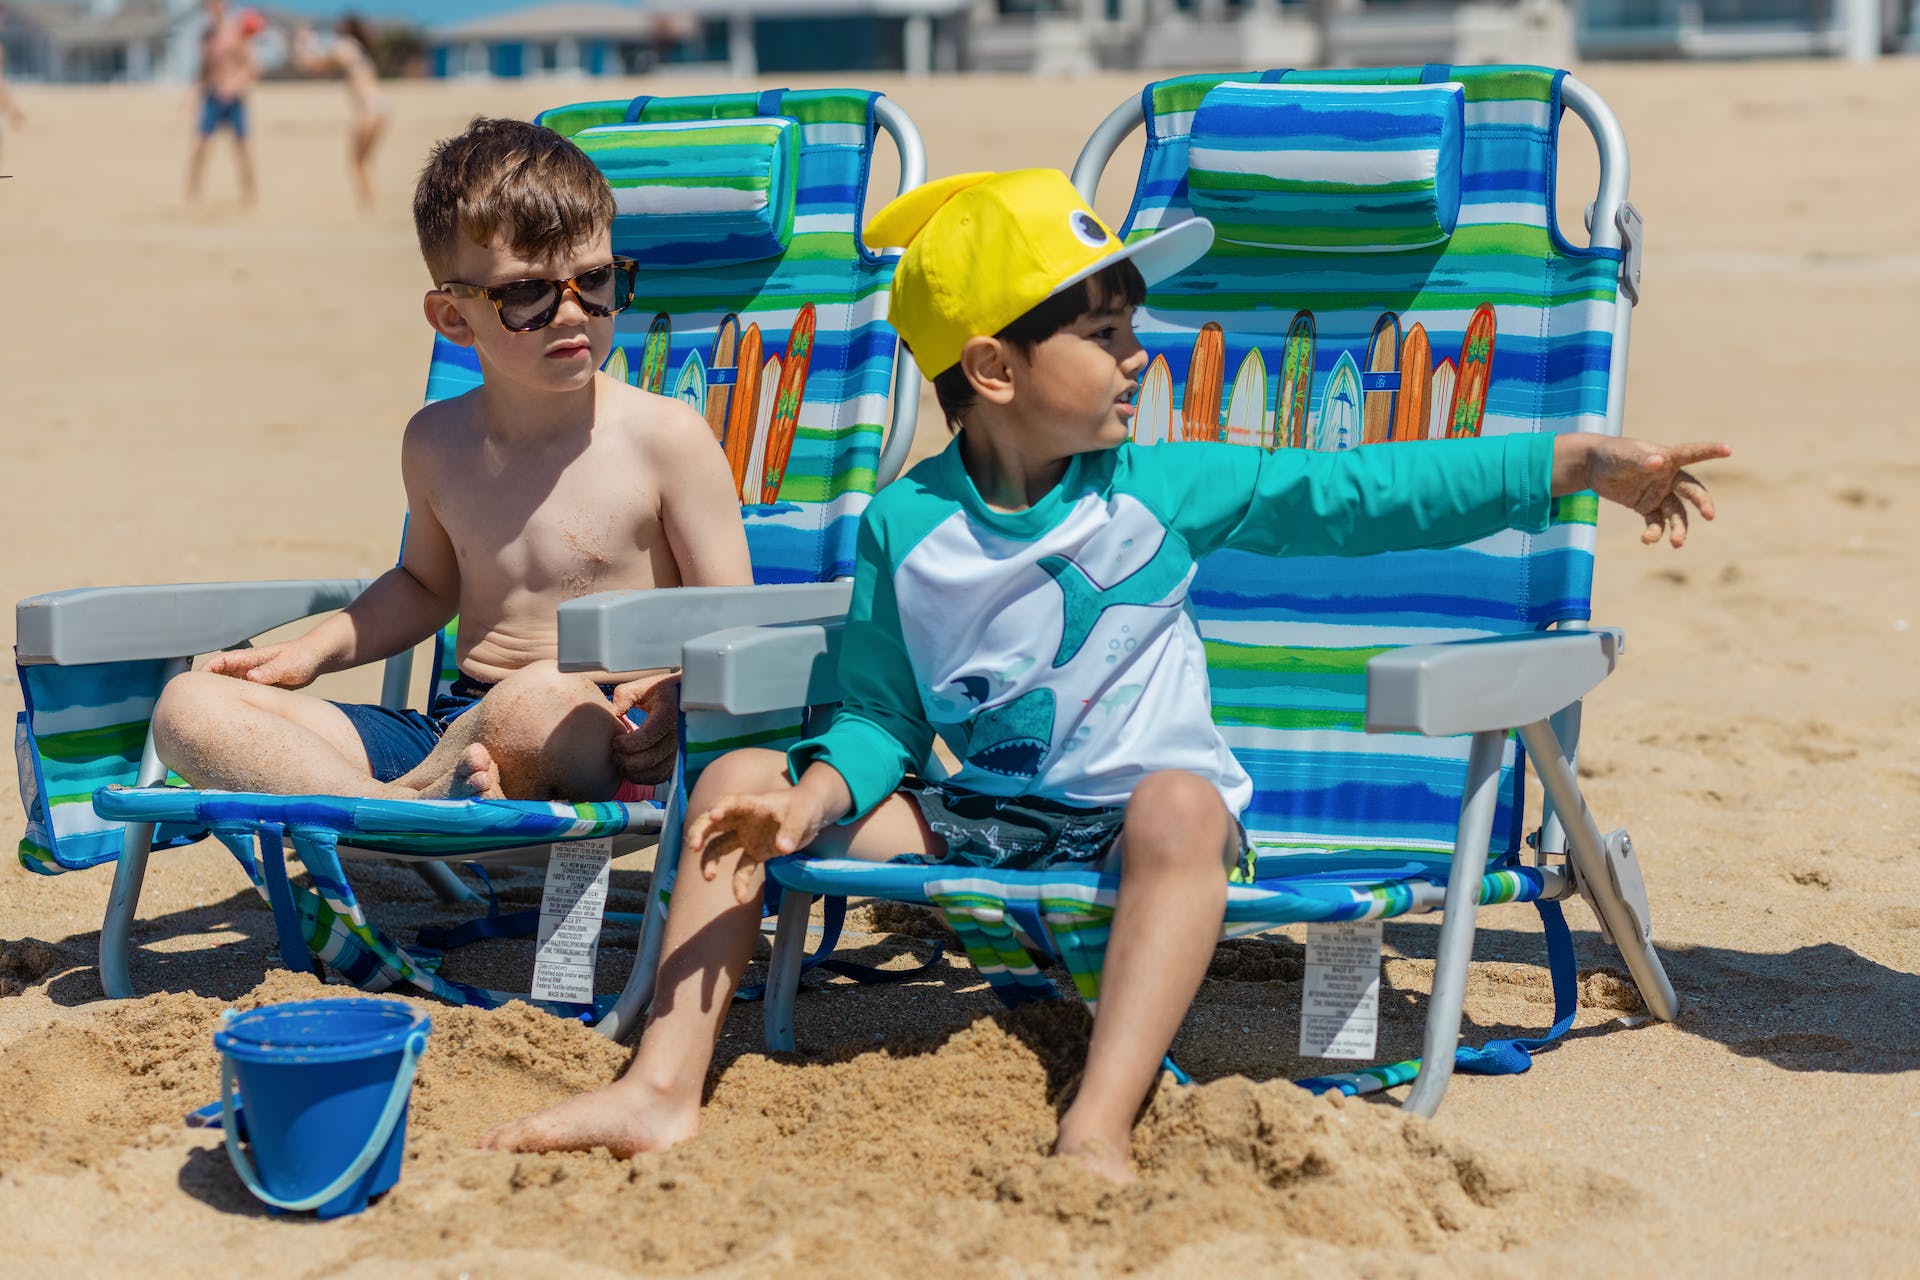 Two boys having fun at the beach | Source: Pexels